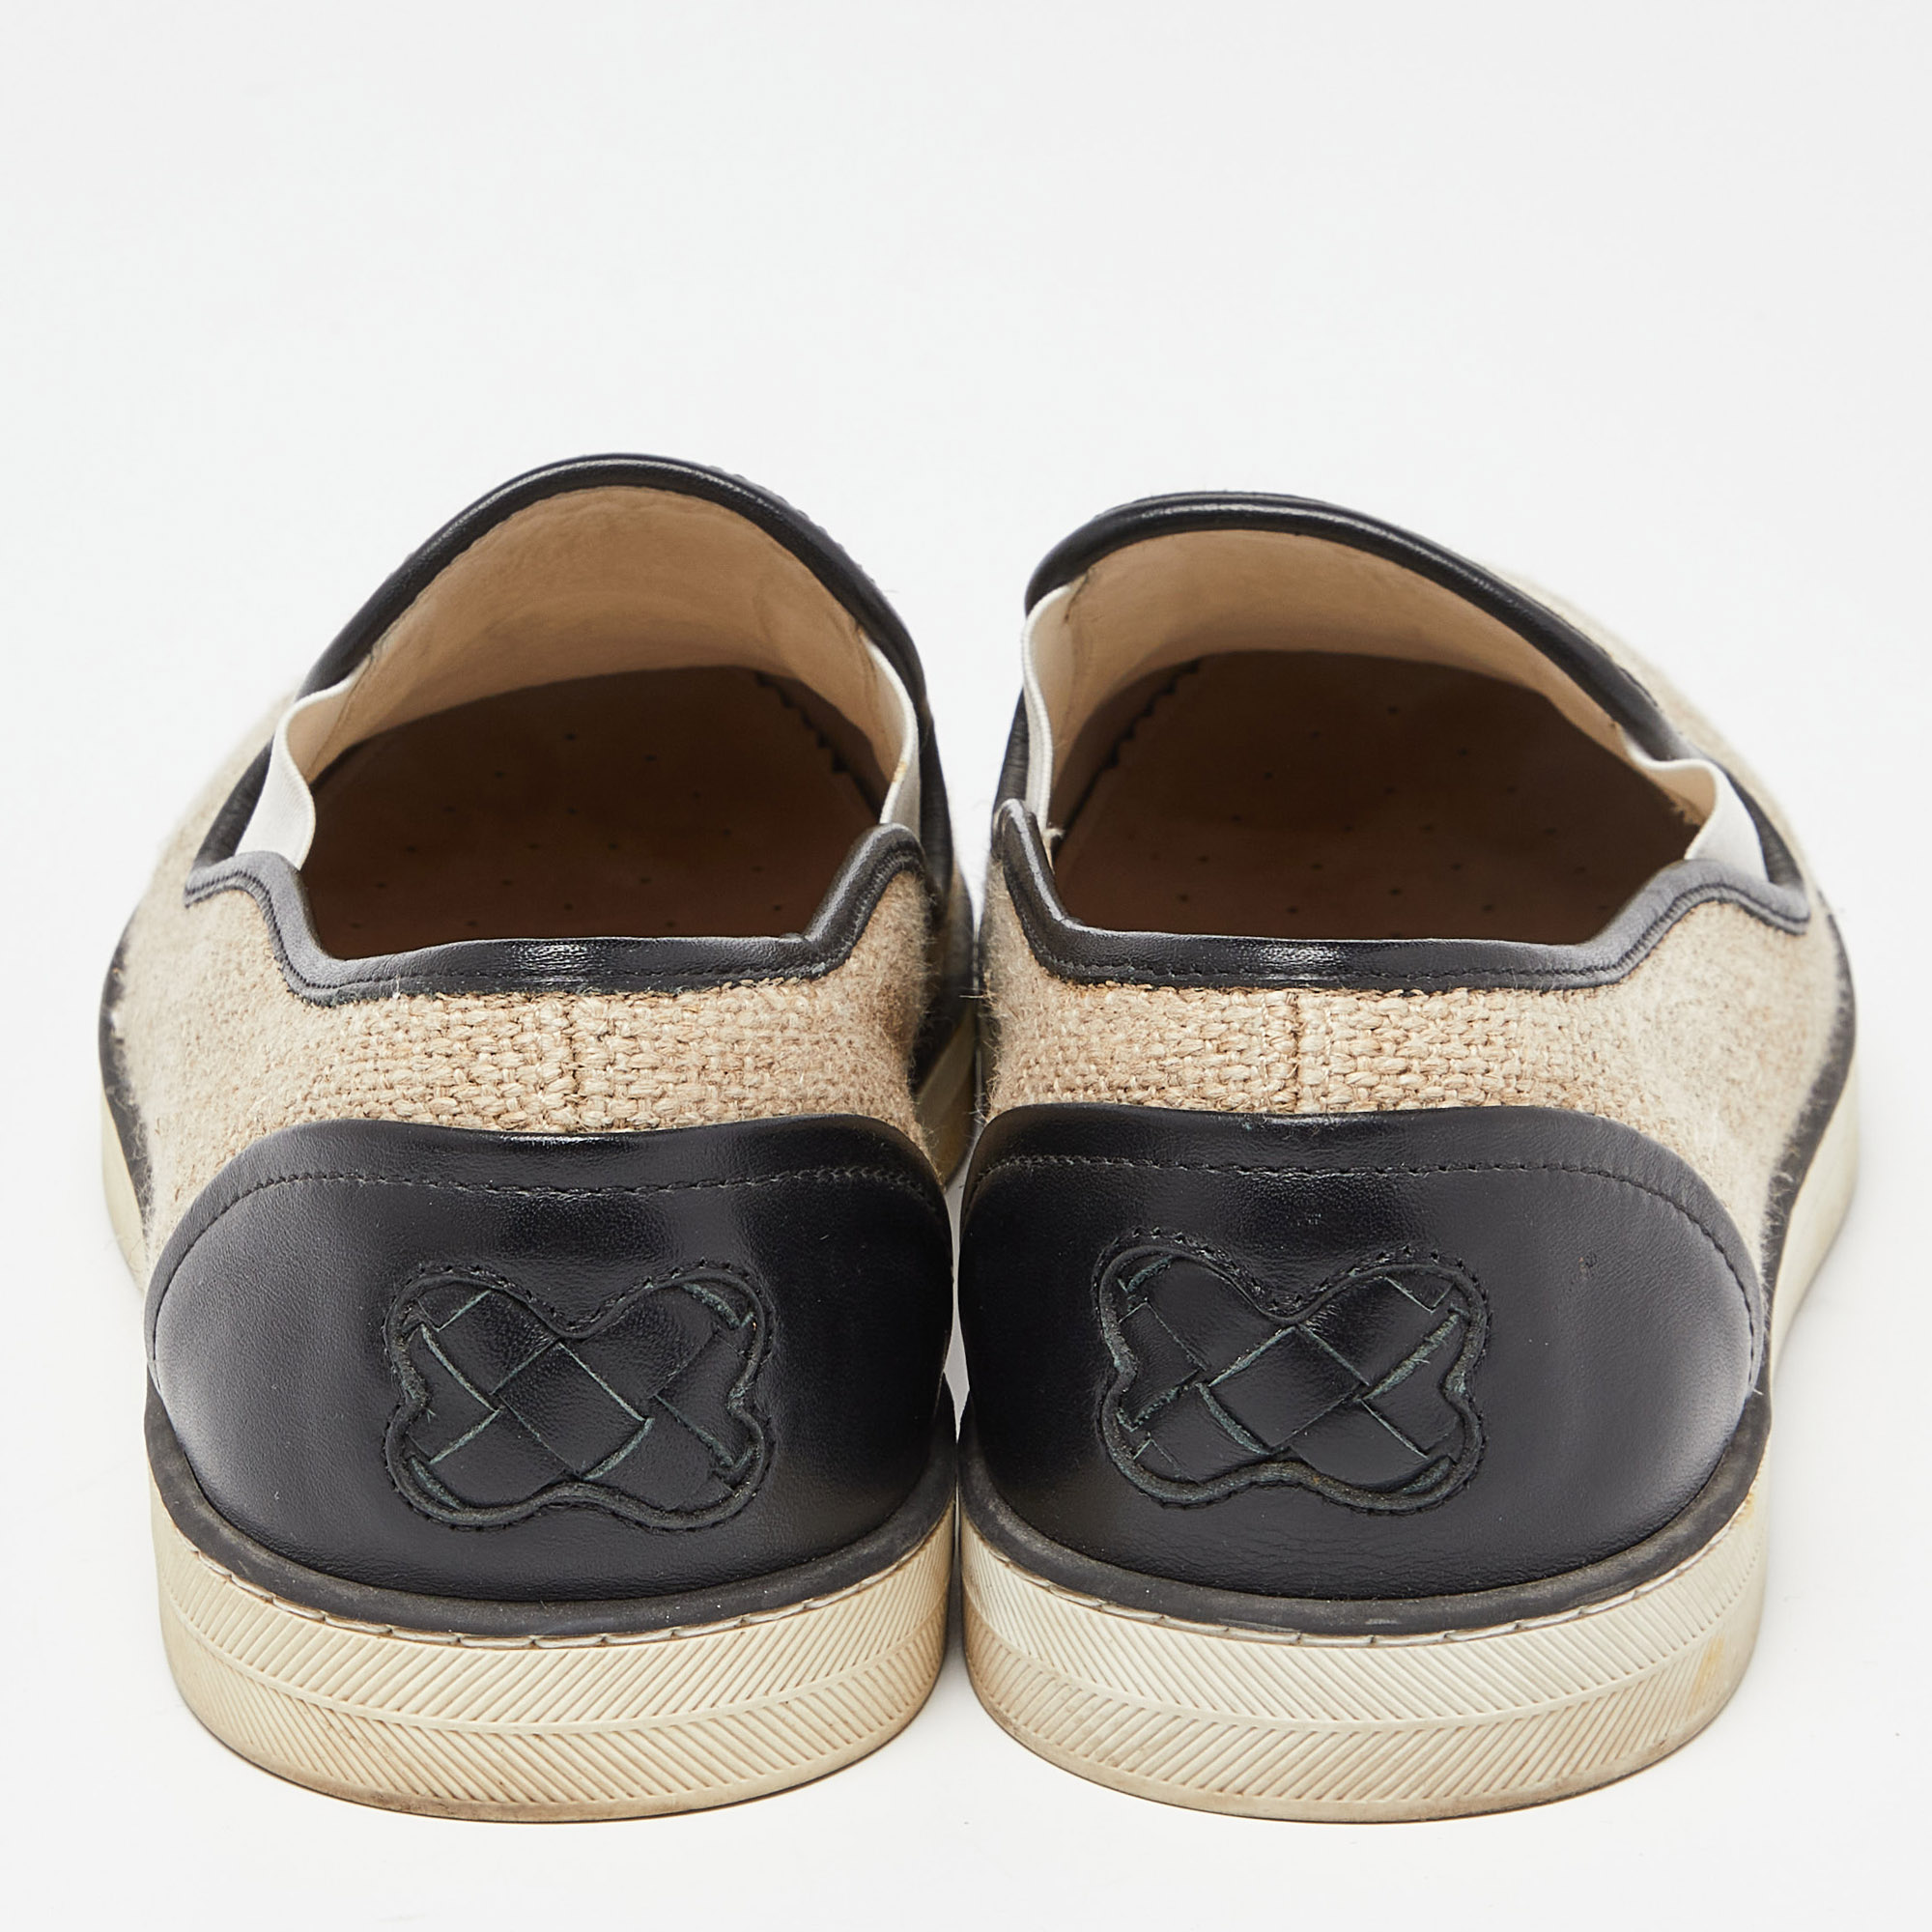 Bottega Veneta Beige/Black Jute And Leather Slip On Sneakers Size 39